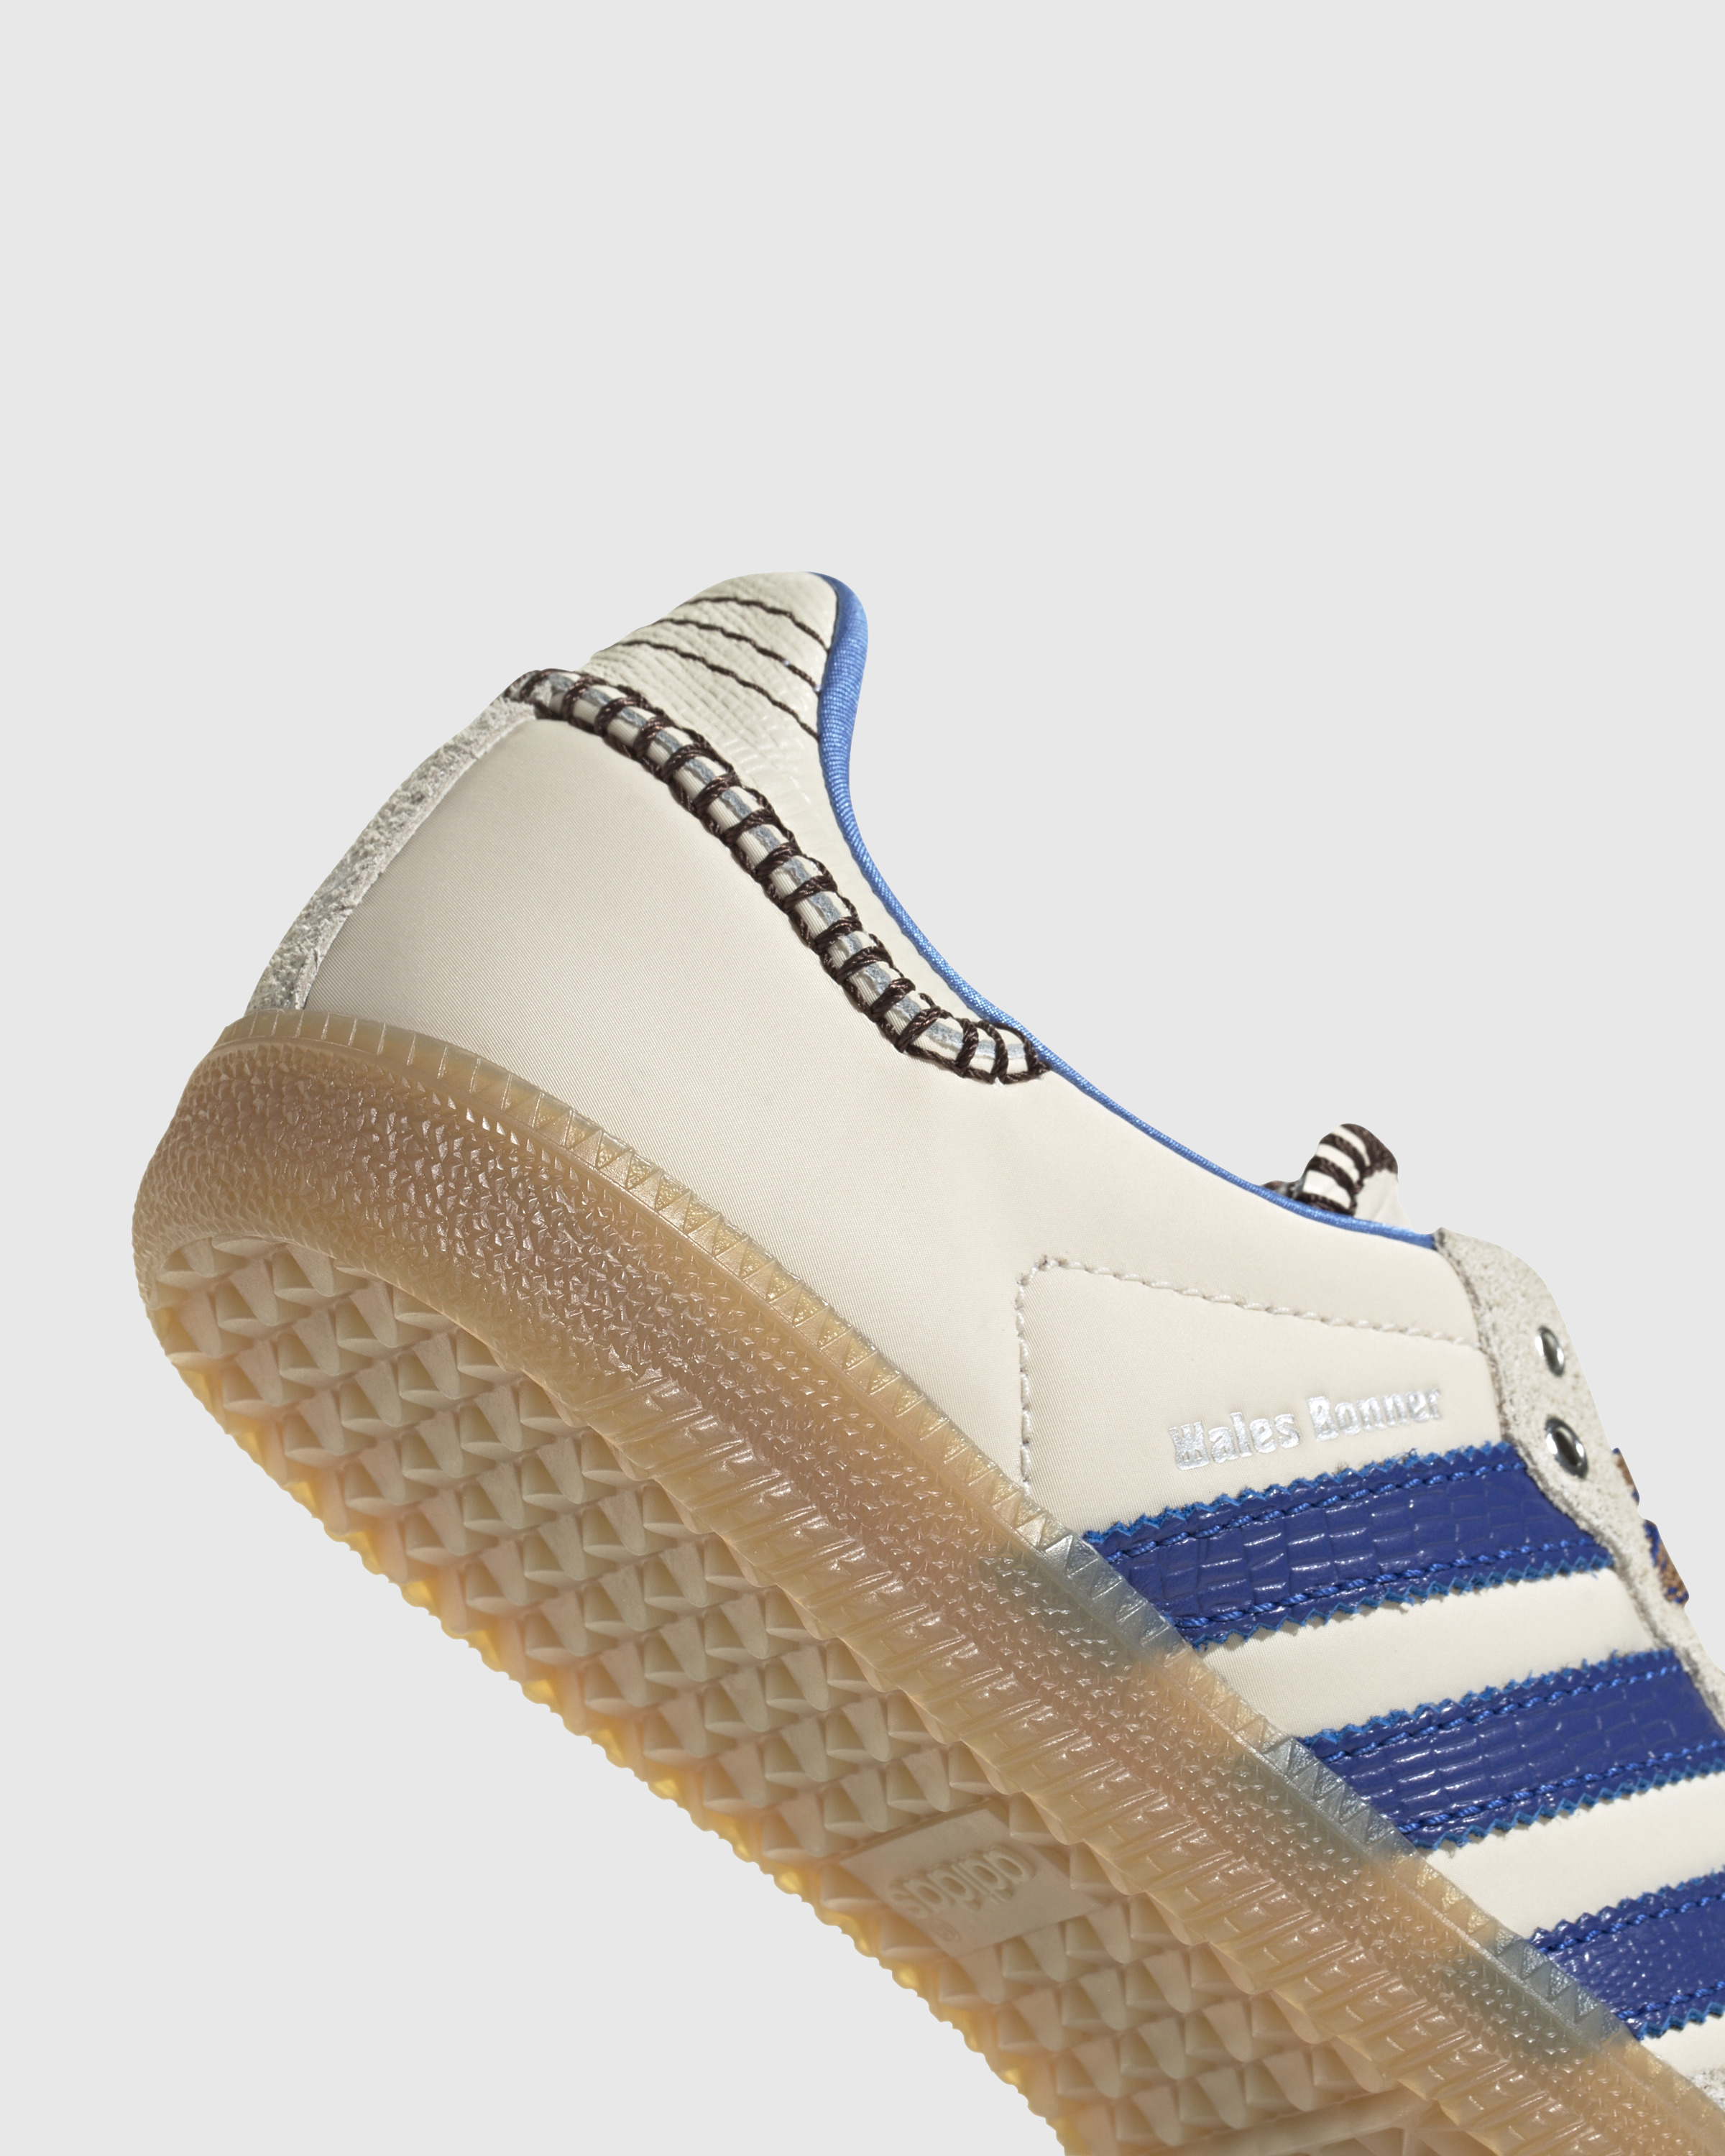 Adidas x Wales Bonner – Samba Cream/Blue - Low Top Sneakers - Beige - Image 6